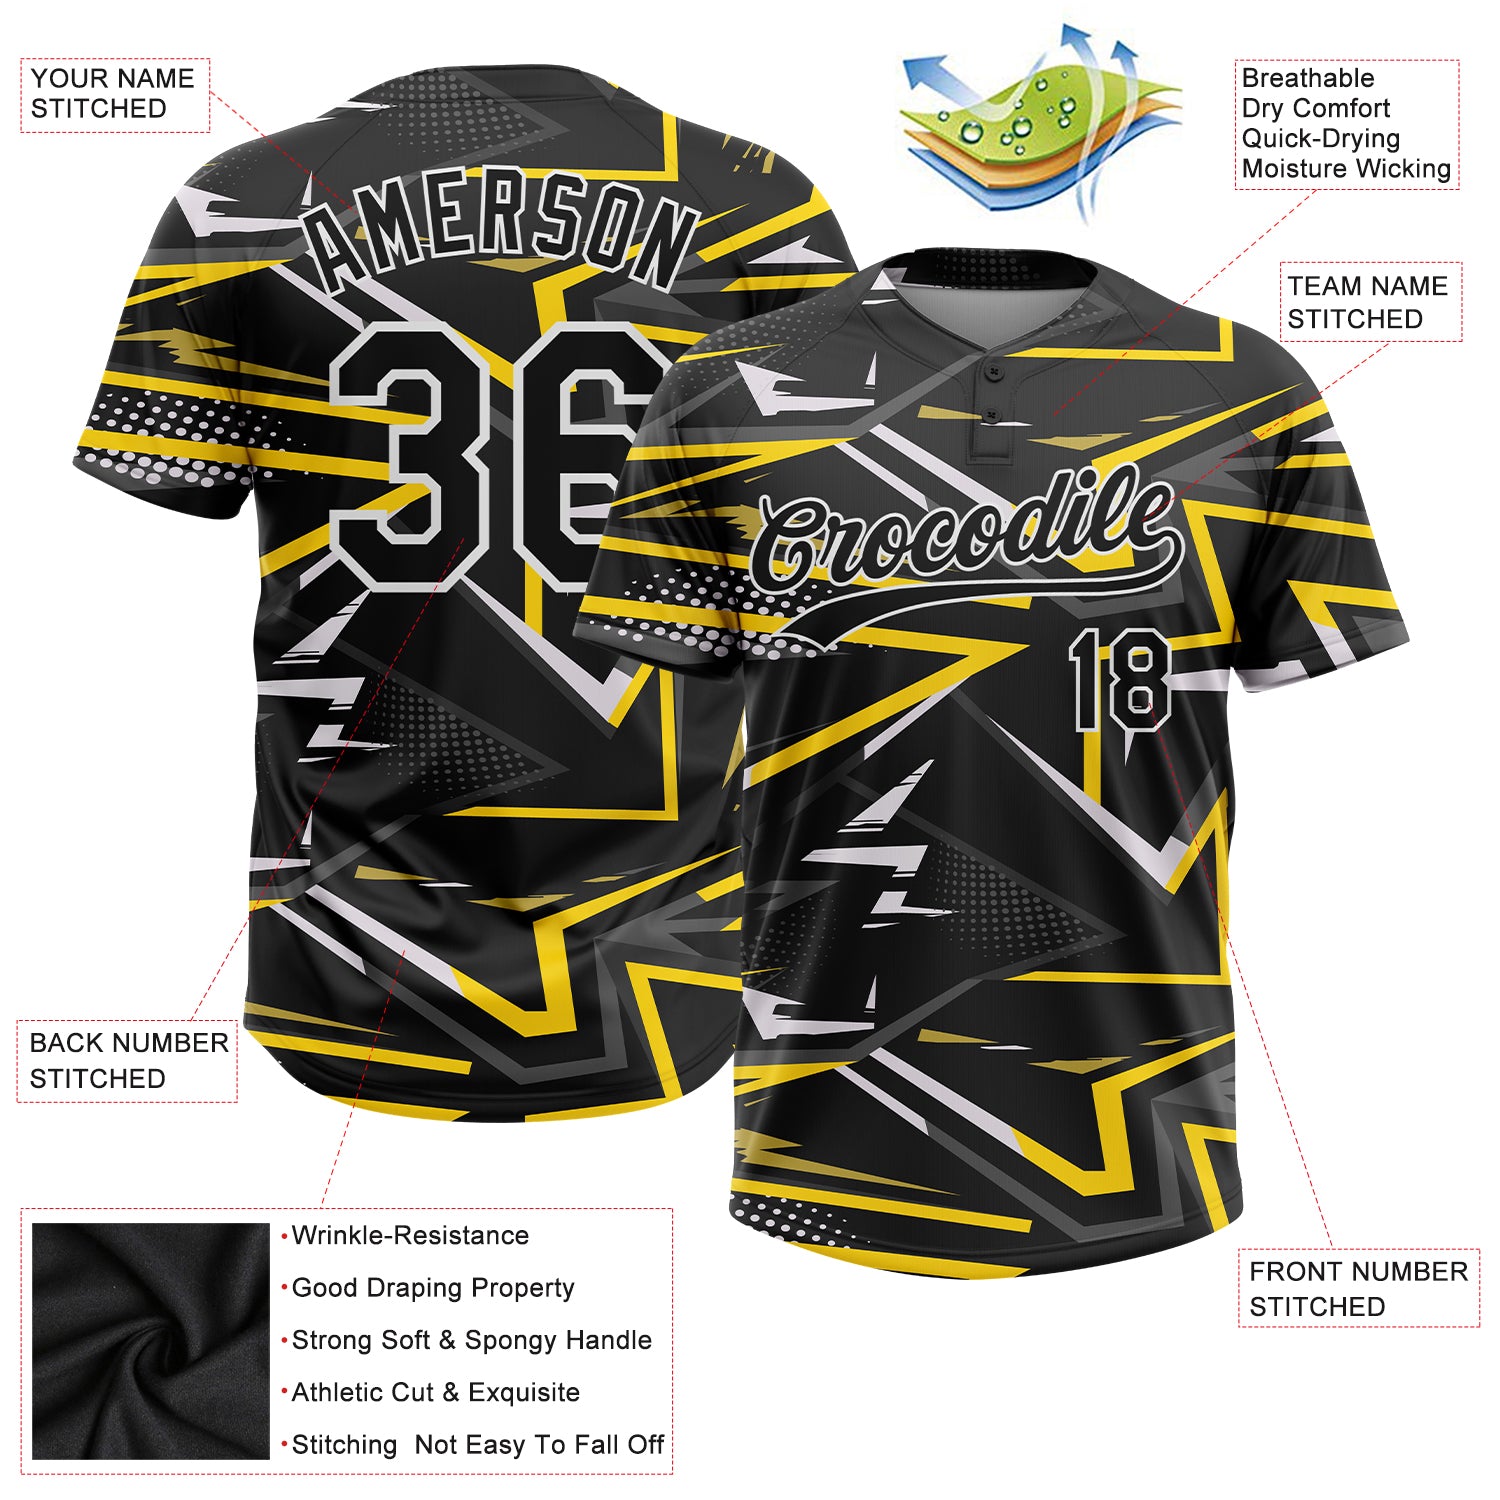 plain custom softball jerseys - full-dye custom softball uniform